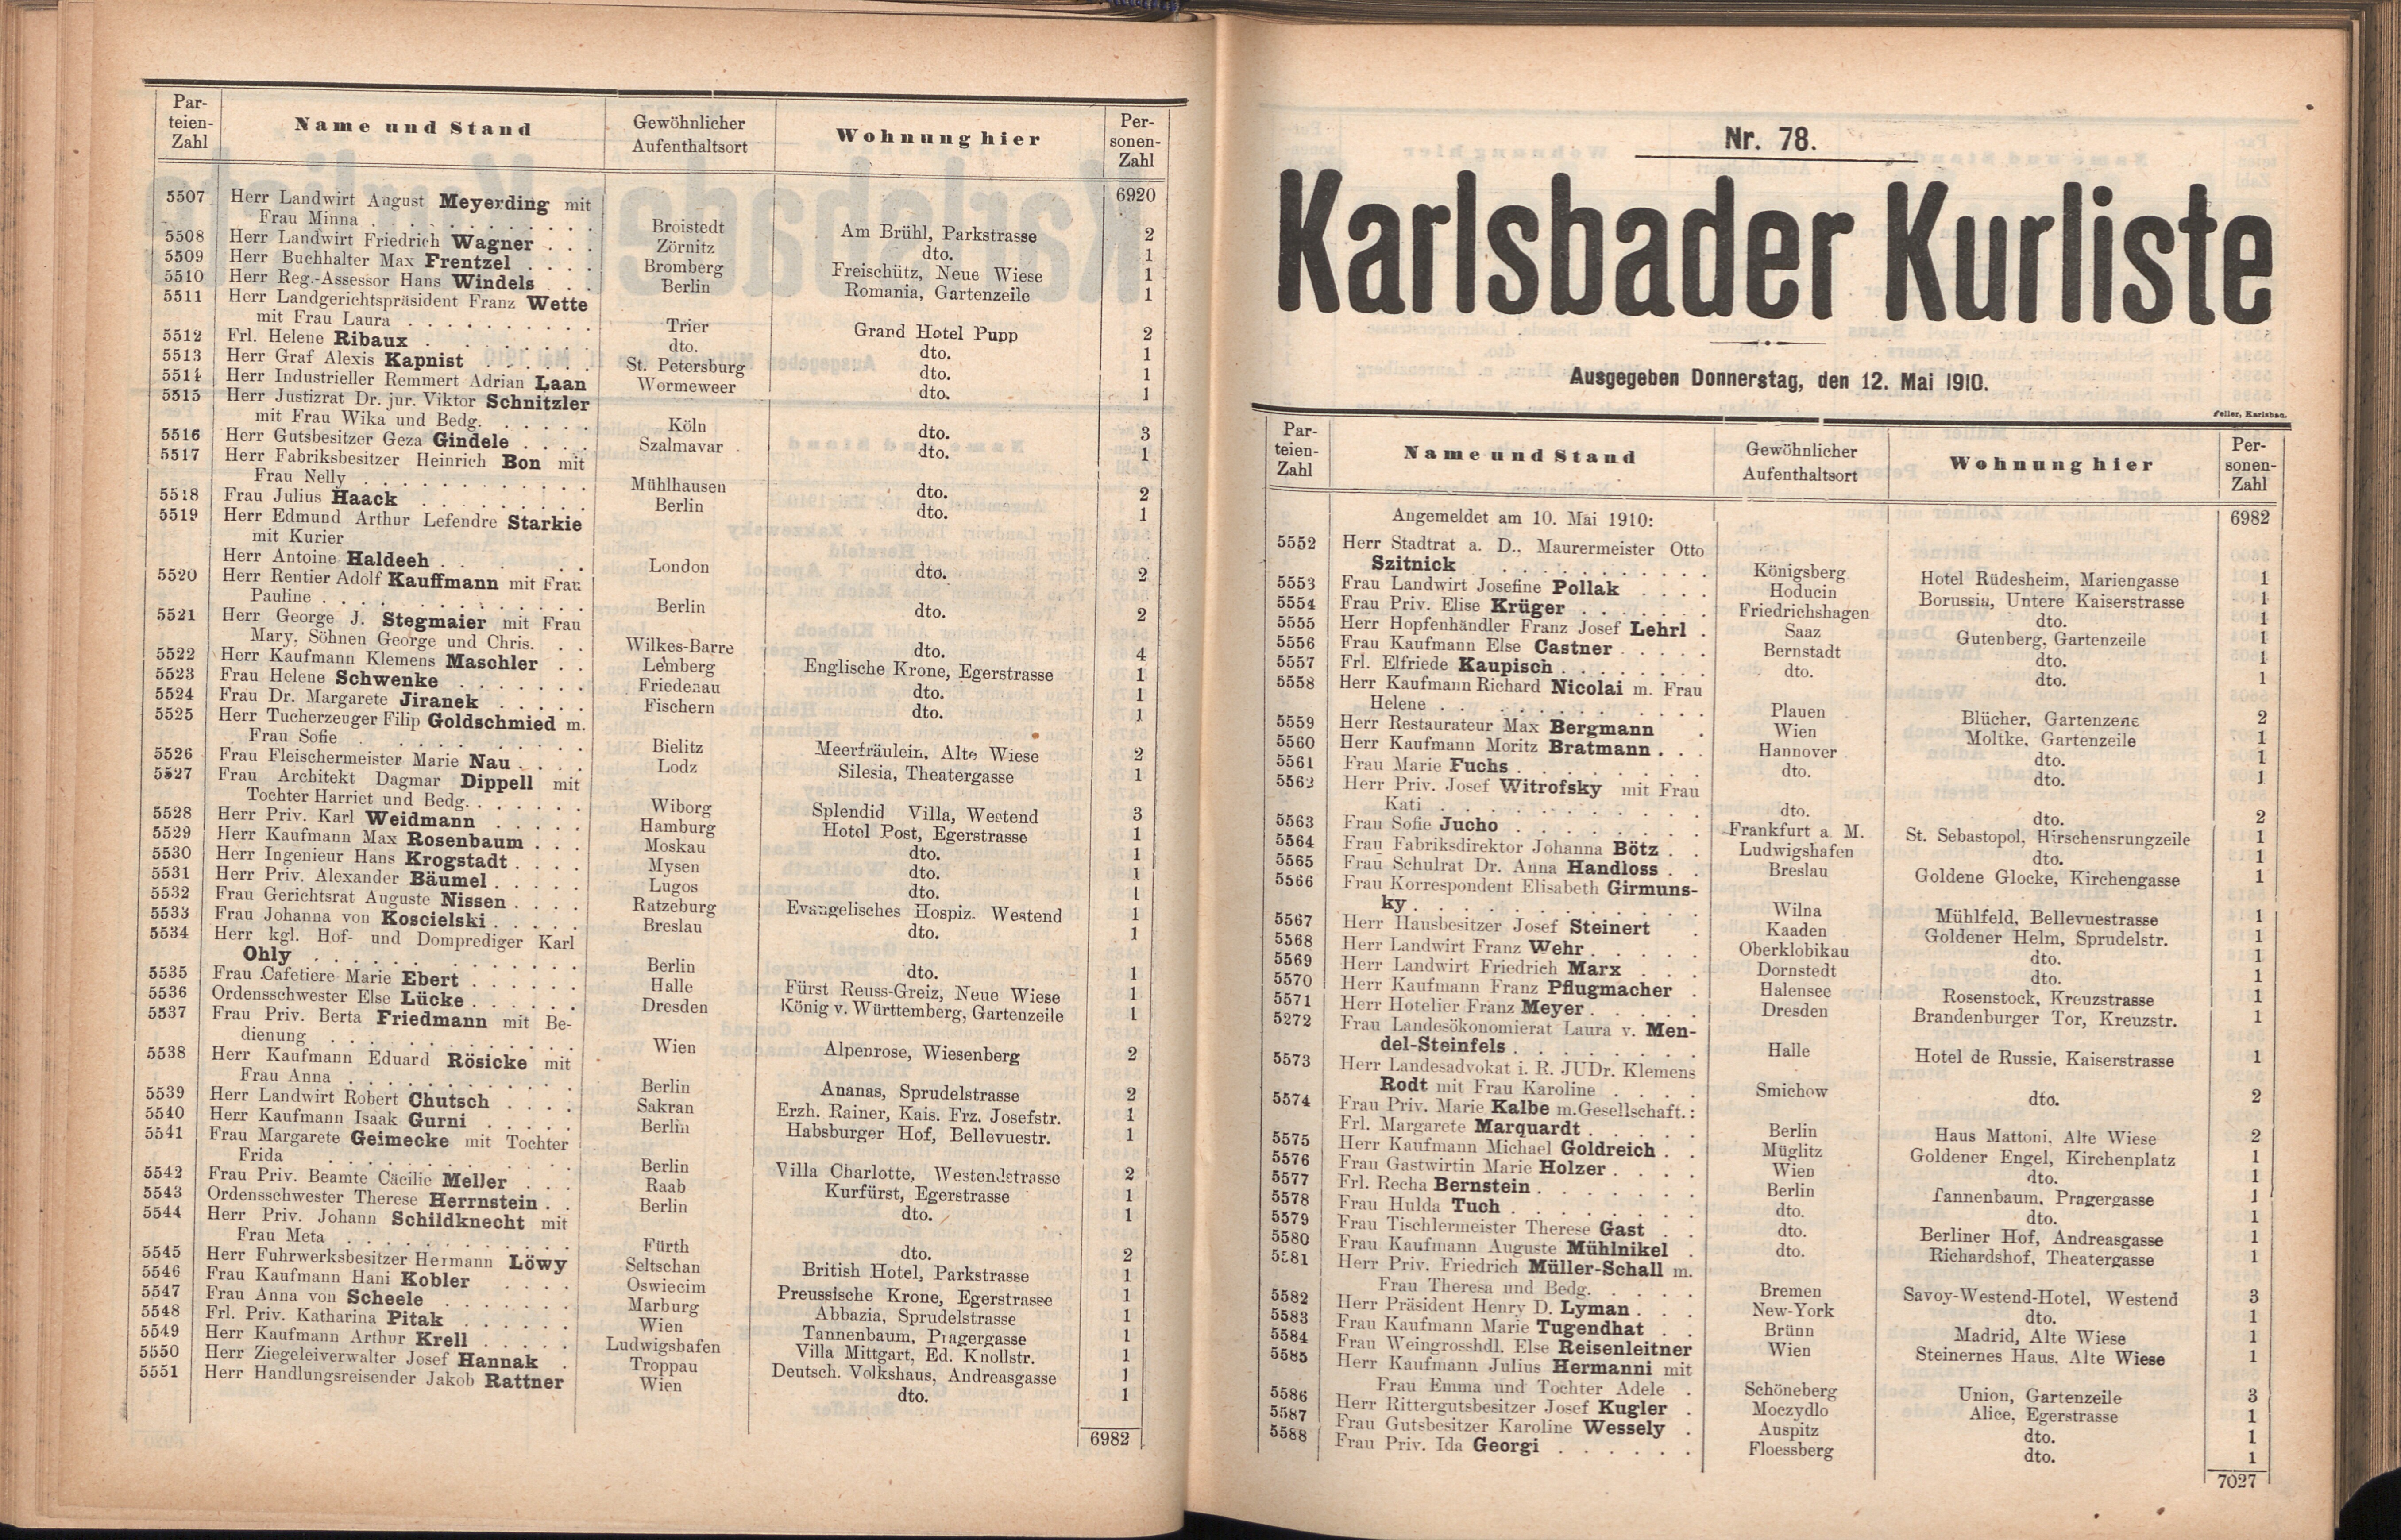 199. soap-kv_knihovna_karlsbader-kurliste-1910_1990